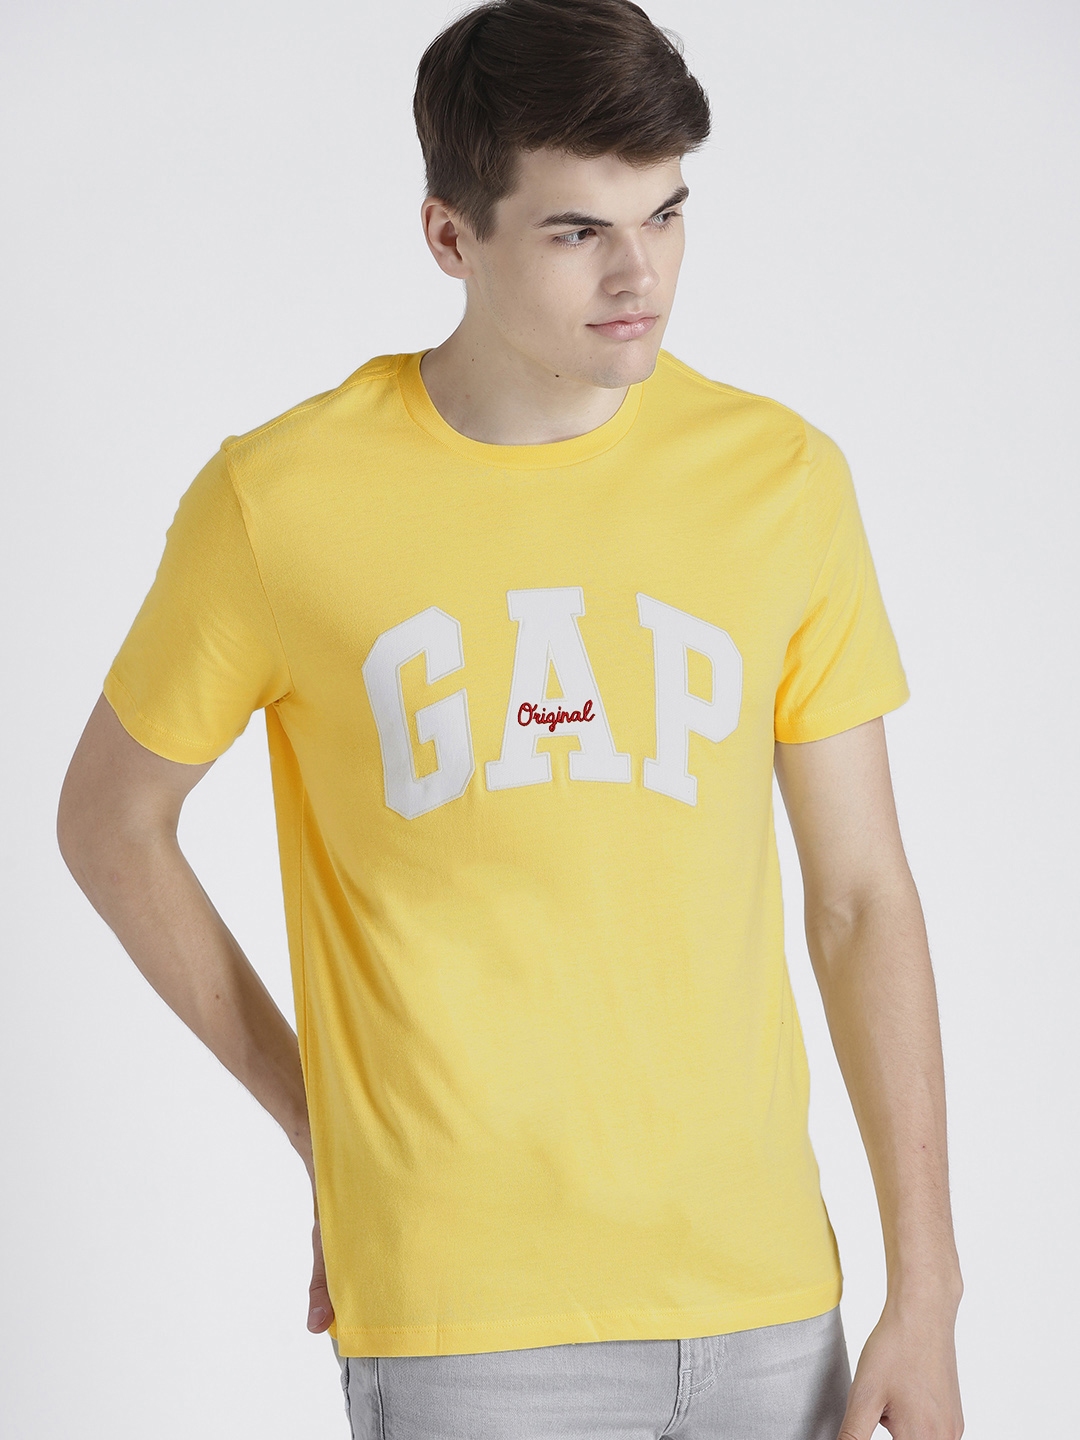 gap yellow t shirt